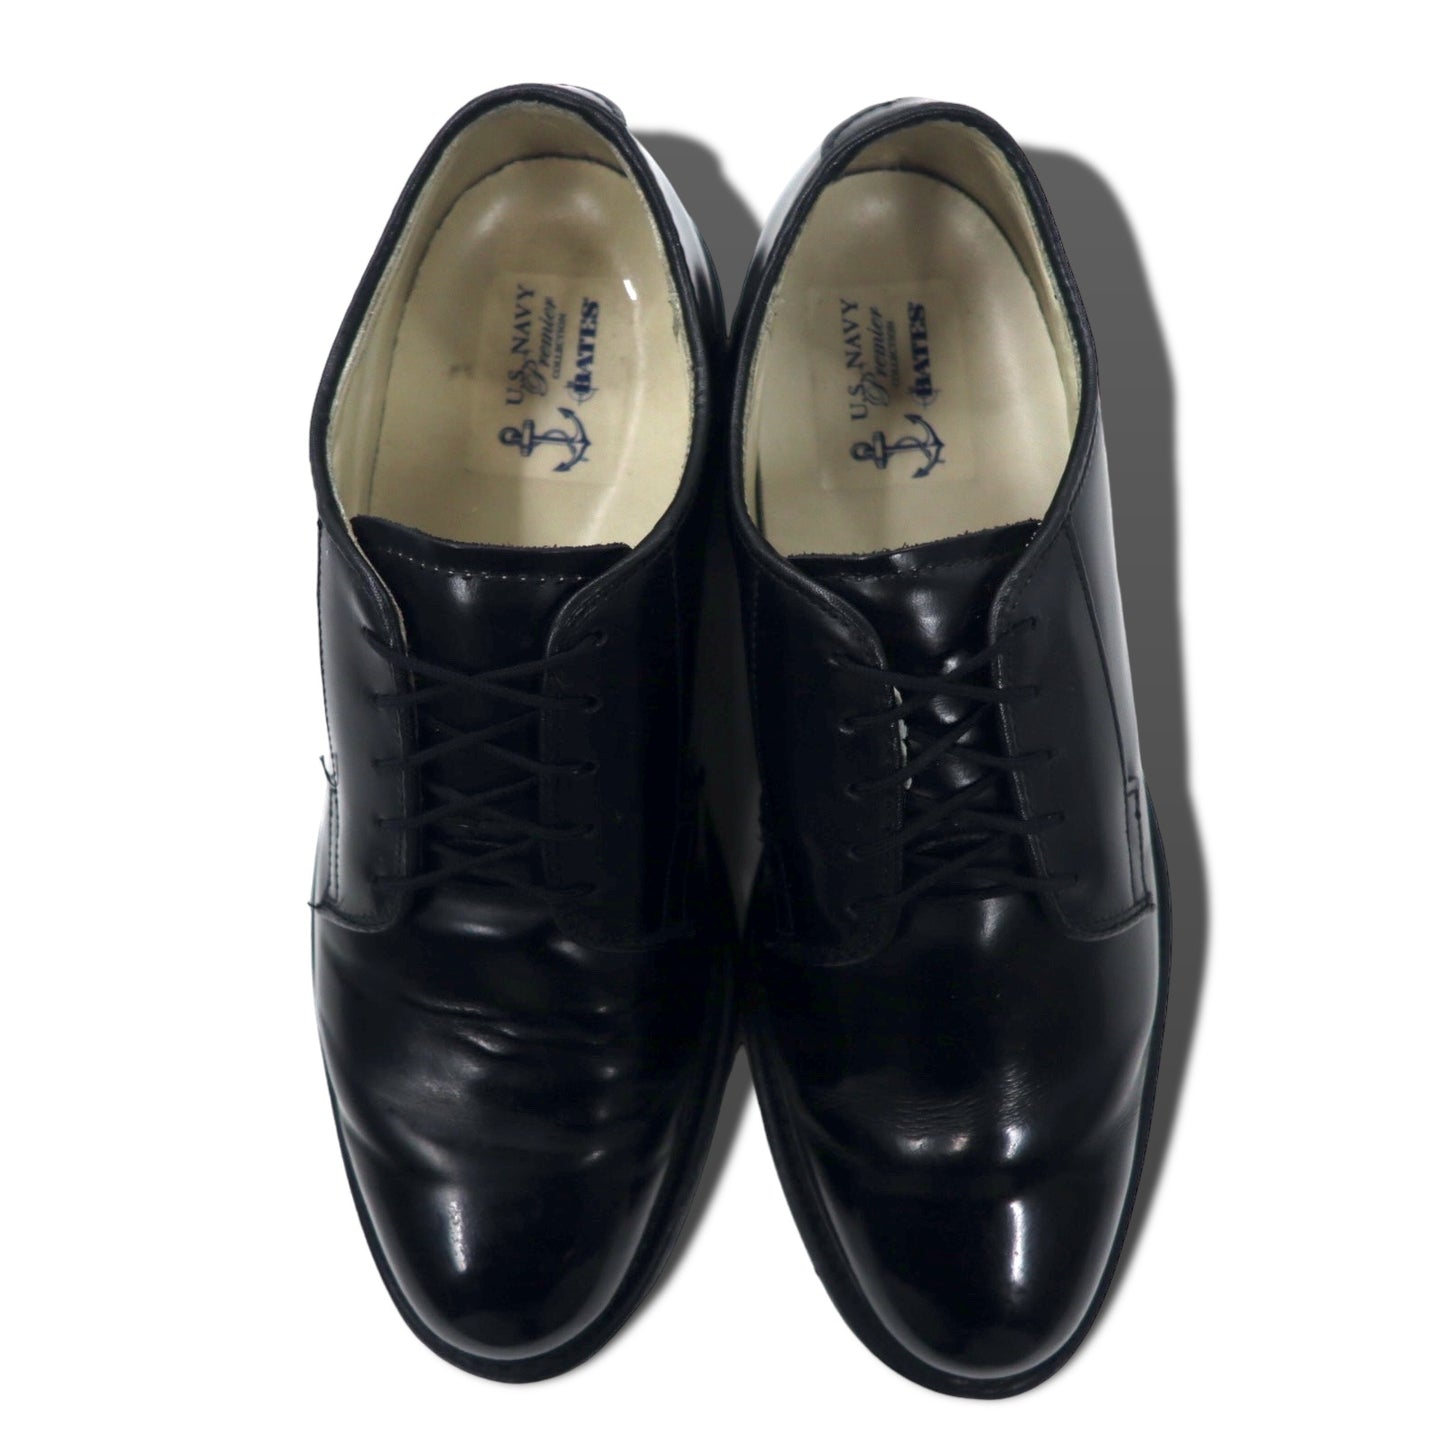 US NAVY USA製 オックスフォード サービスシューズ 29cm ブラック レザー Vibramソール PREMIER COLLECTION ミリタリー BATES 15825-001808-75-28 Military Oxford Dress Shoes